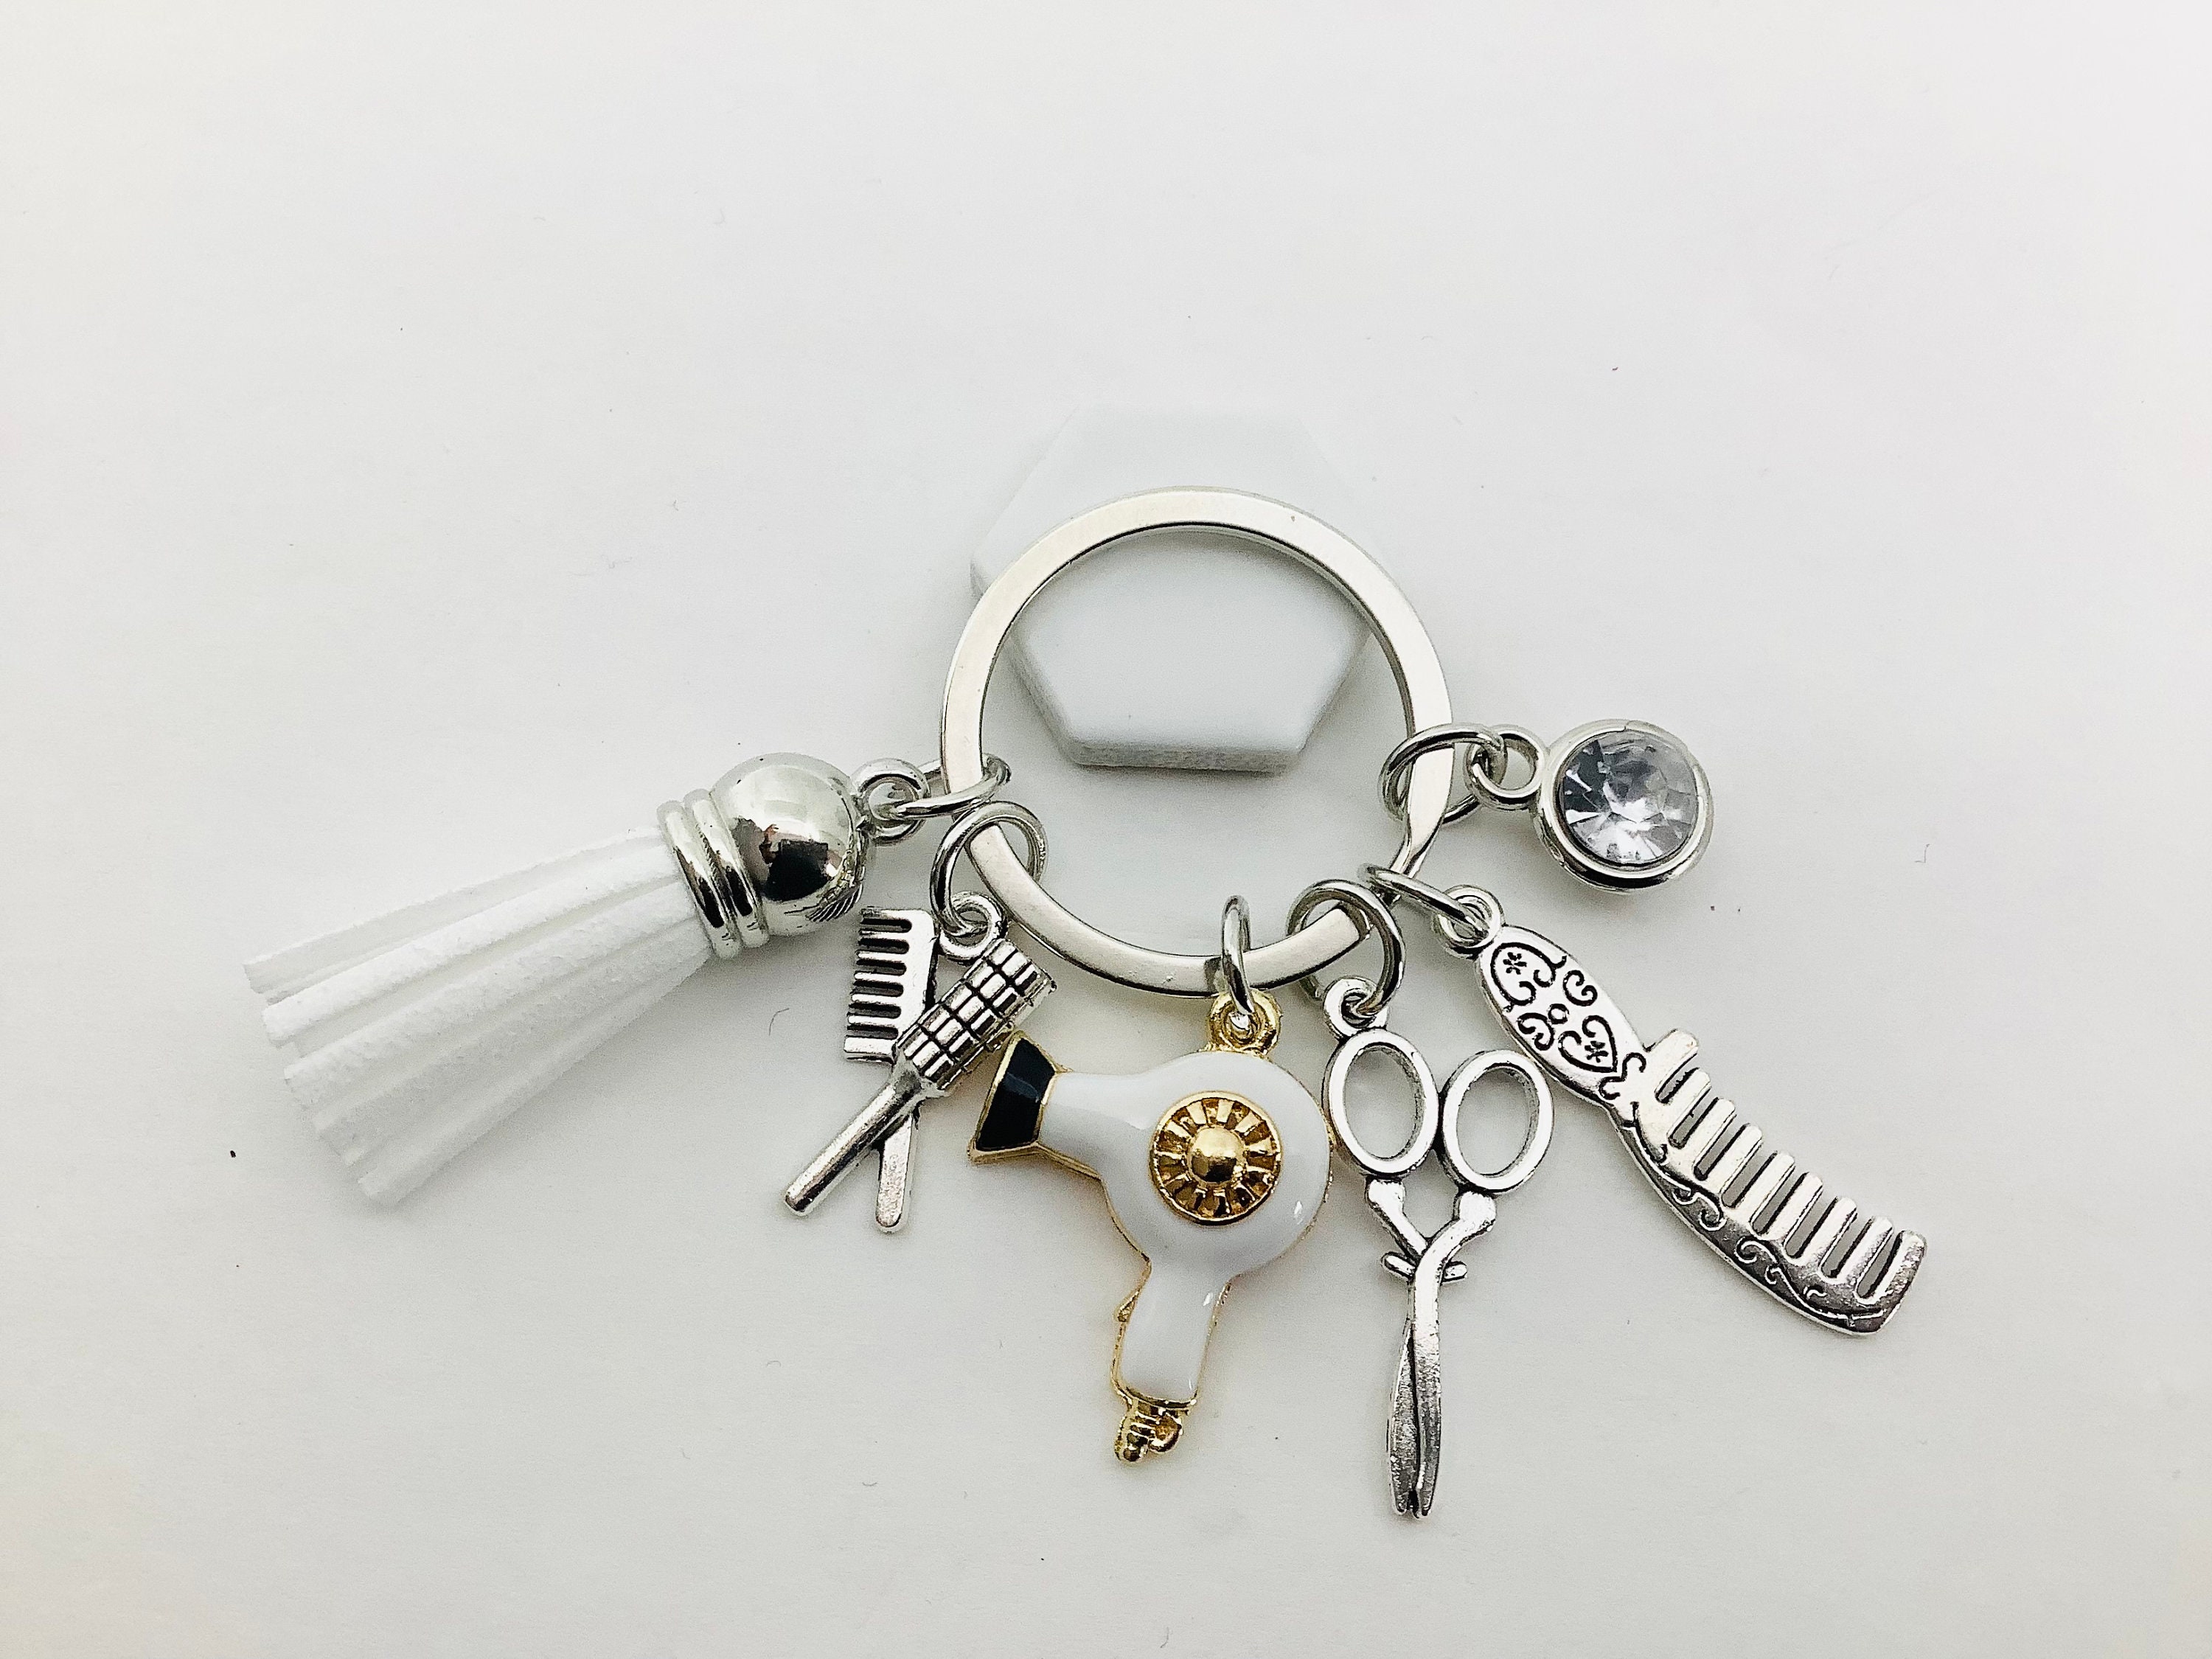  FOYTOKI Hair Dryer Keychain Funny Keychains Friend Hair Stylist  Key Ring Hairdresser Keychain Scissors Keychain Car Keys Keychain  Hairdresser Gifts Hanging Stuffing Zinc Alloy Handbag : Home & Kitchen